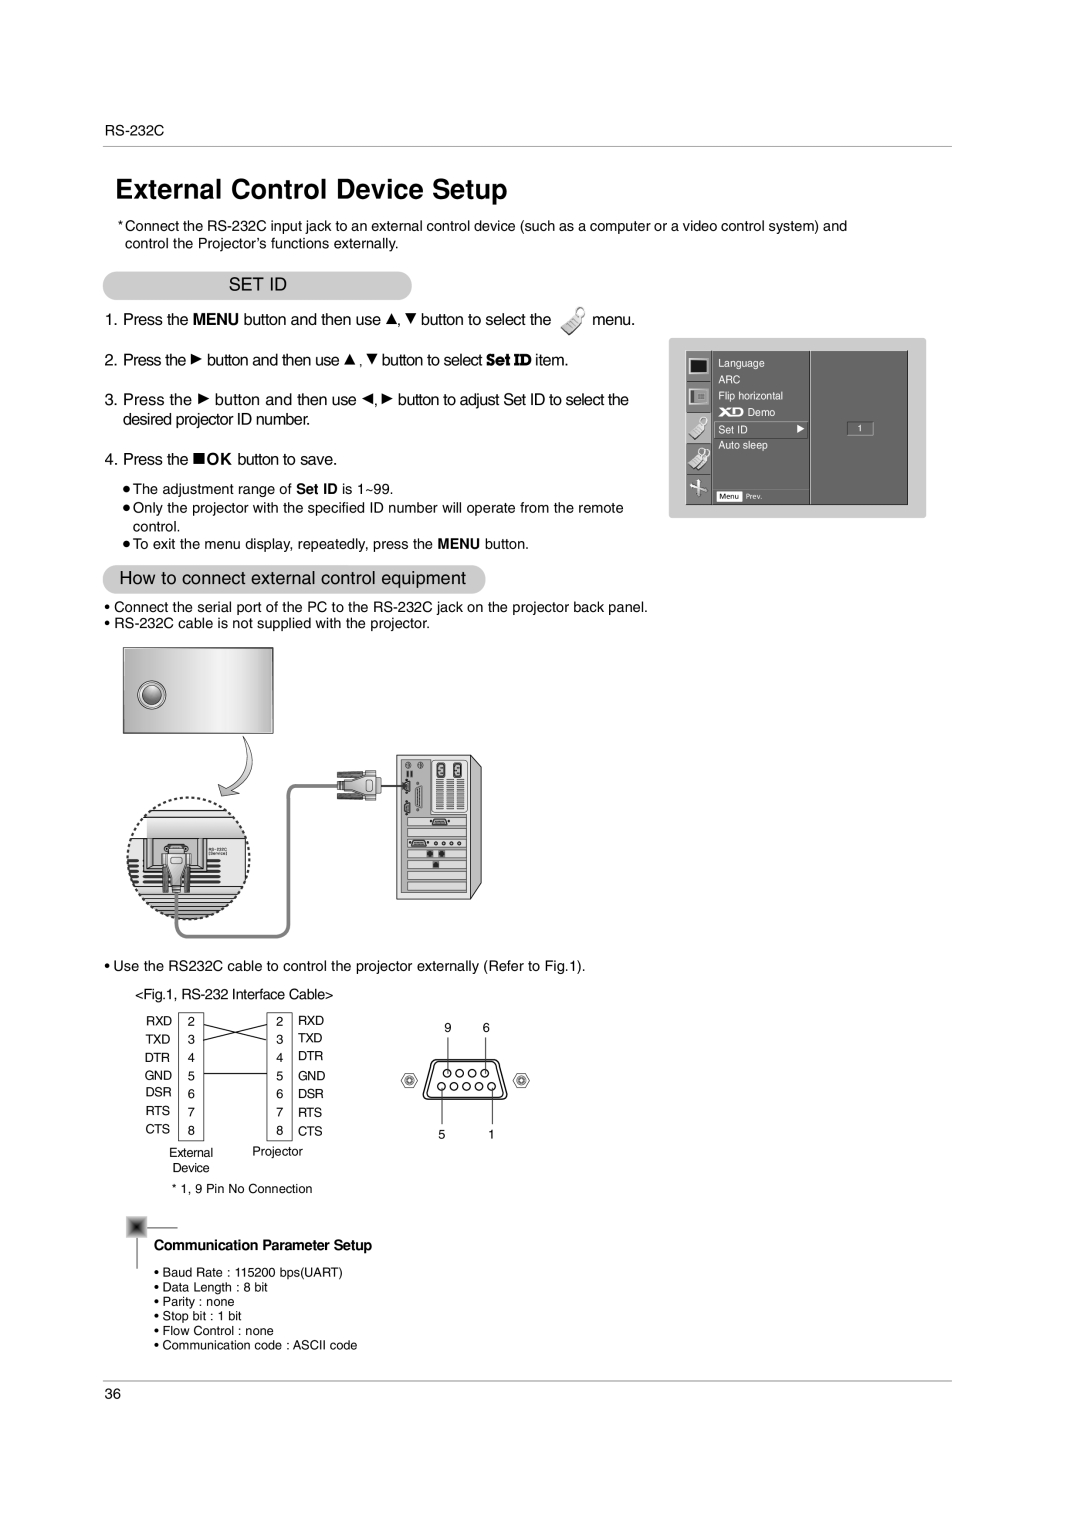 LG Electronics AN110W-JD, AN110B-JD External Control Device Setup, Set Id, How to connect external control equipment 